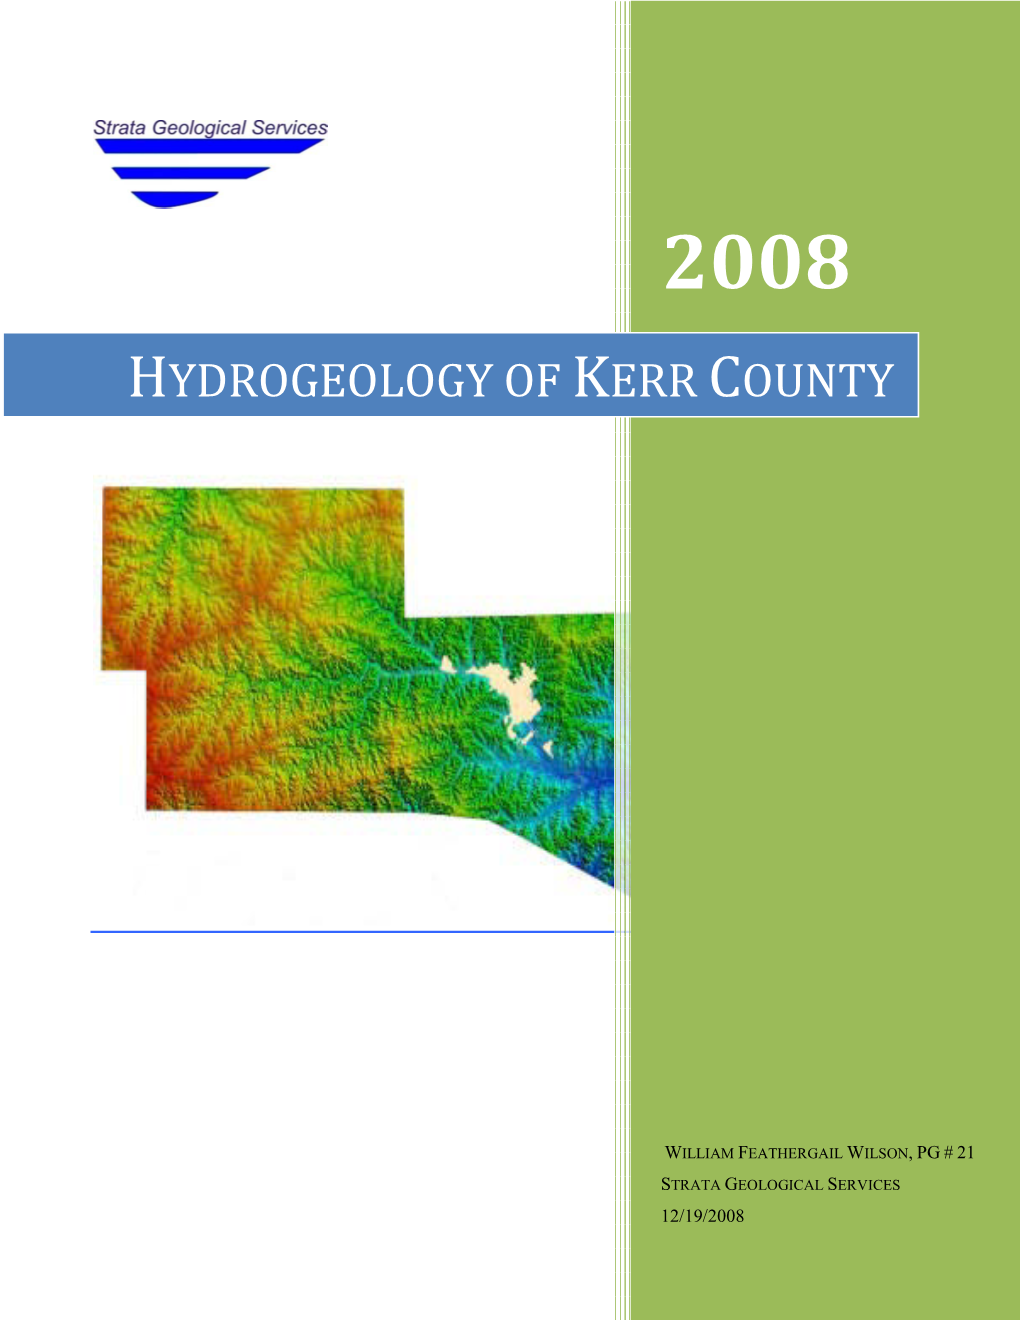 Hydrogeology of Kerr County 2008